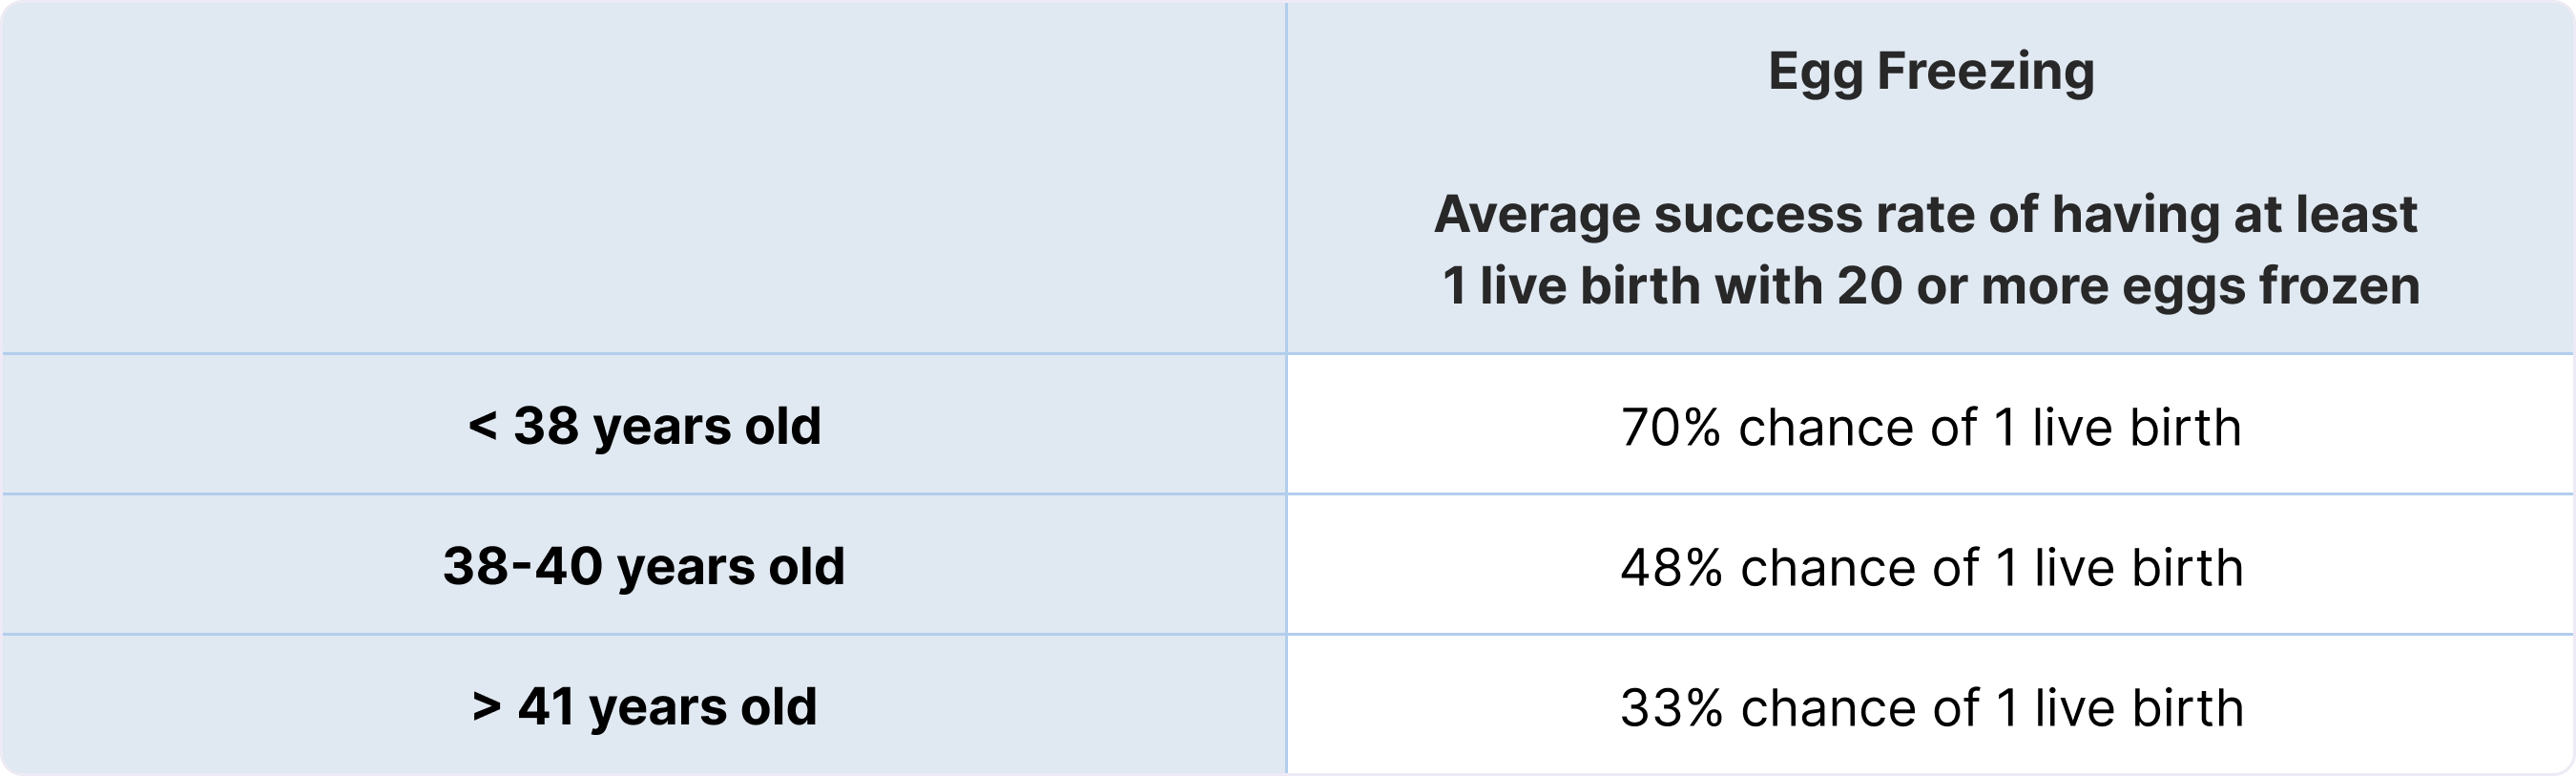 Live birth rate statistics for egg freezing